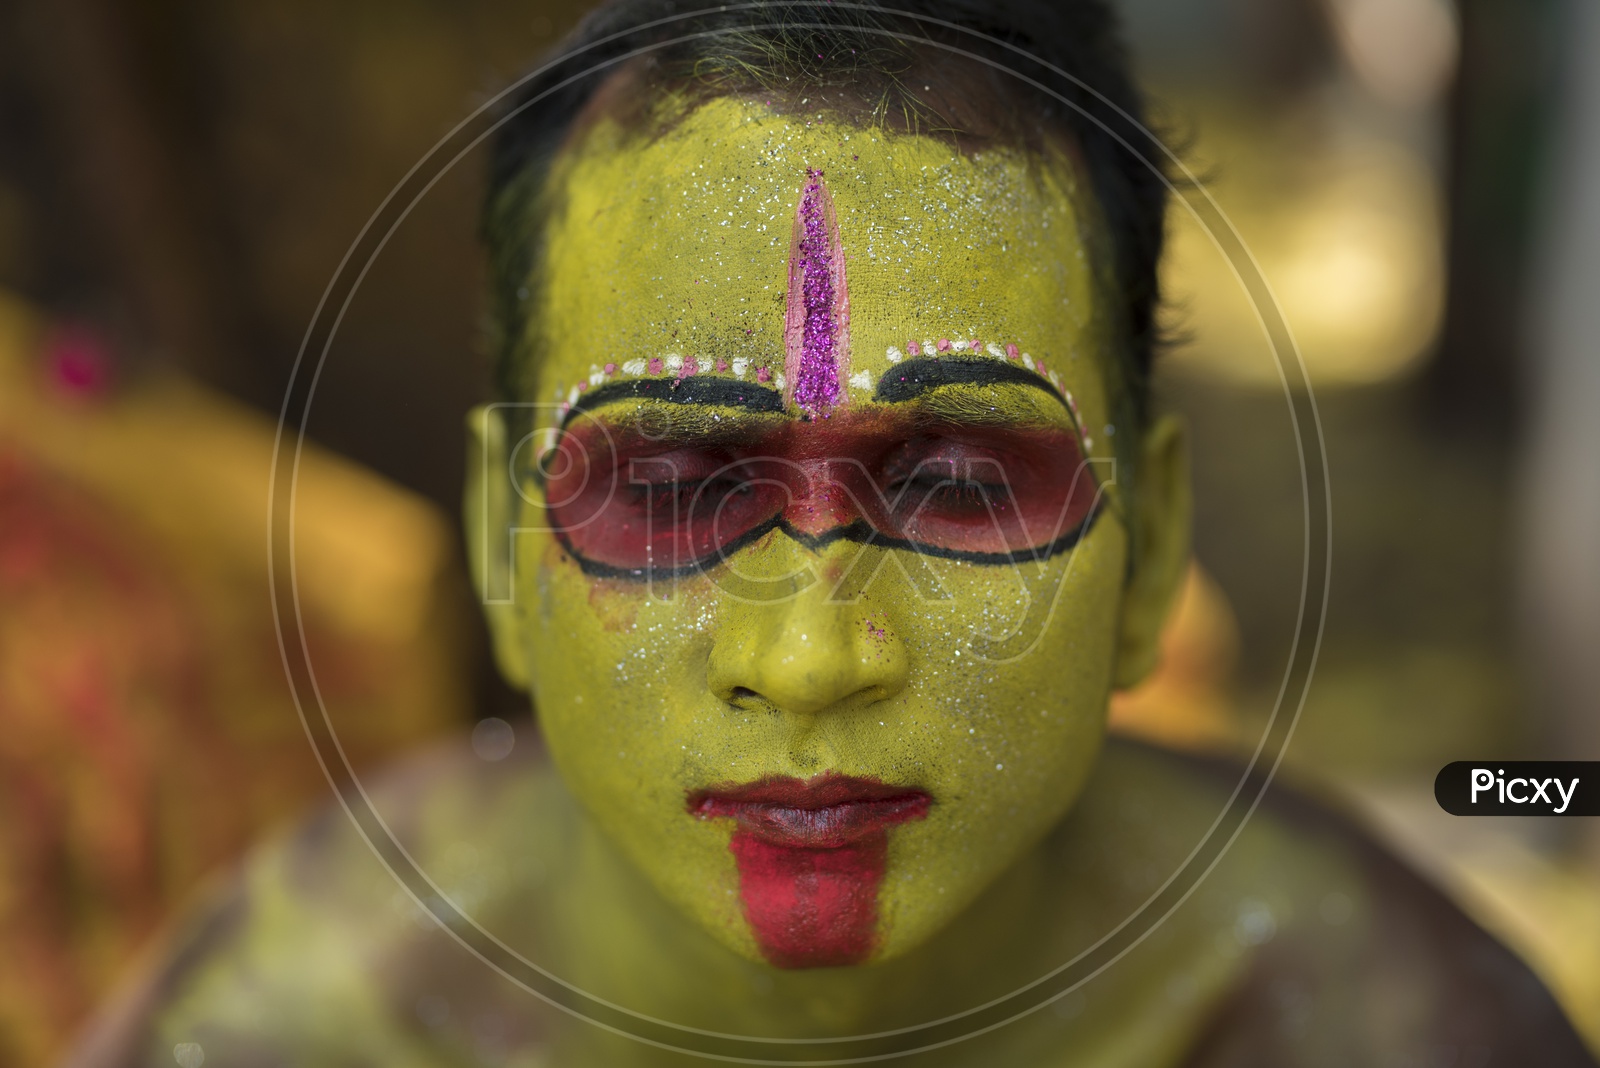 Indian hindu Devotee Boy In a makeup Session For Dussera Celebration ritual in Tamil nadu